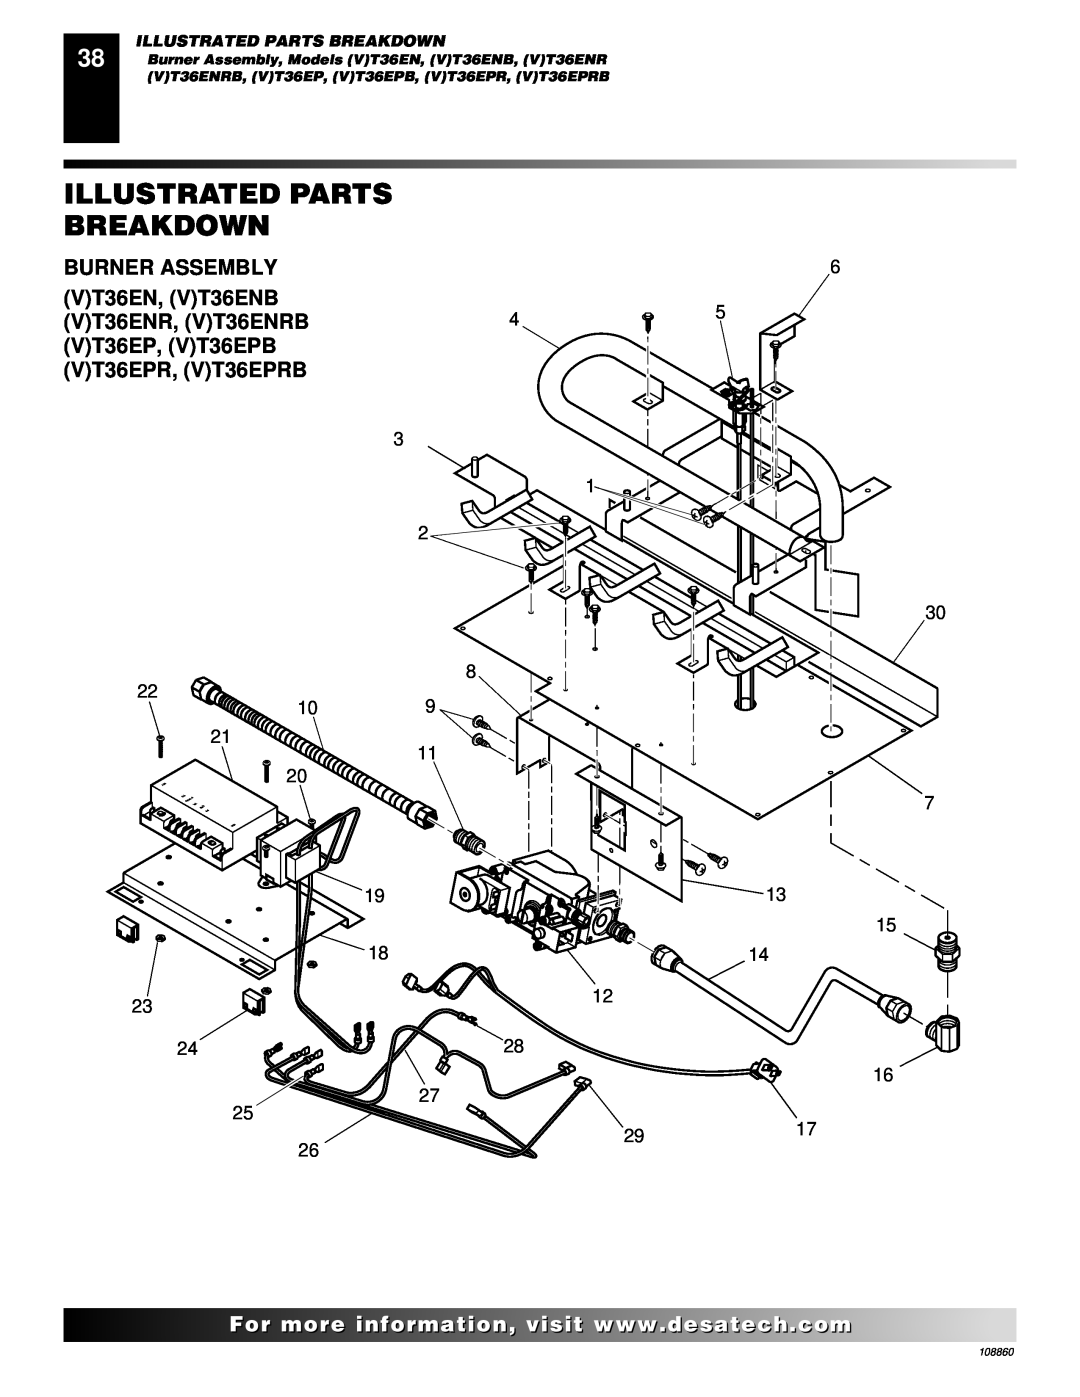 Desa (V)T36EN SERIES Illustrated Parts, Breakdown, Burner Assembly, VT36EN, VT36ENB, VT36ENR, VT36ENRB, VT36EP, VT36EPB 